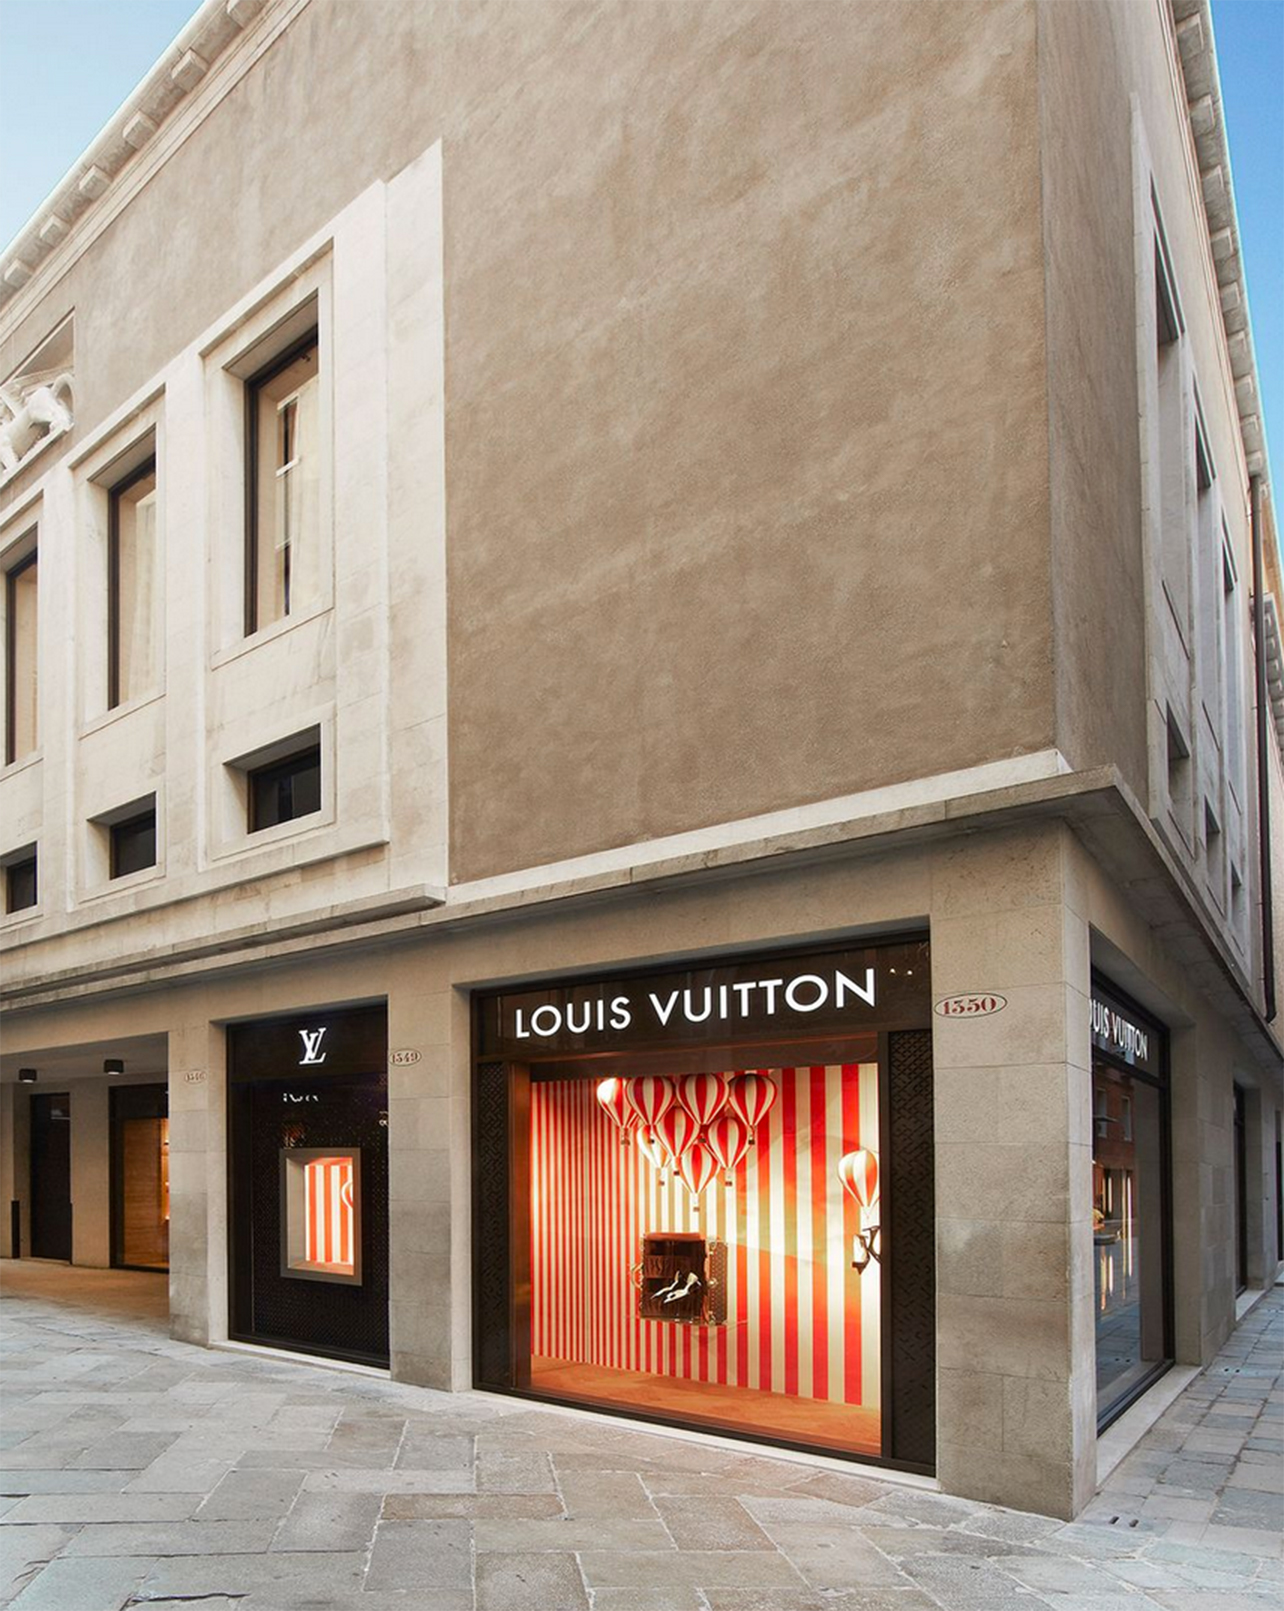 6 Louis Vuitton Art Exhibits to visit around the world